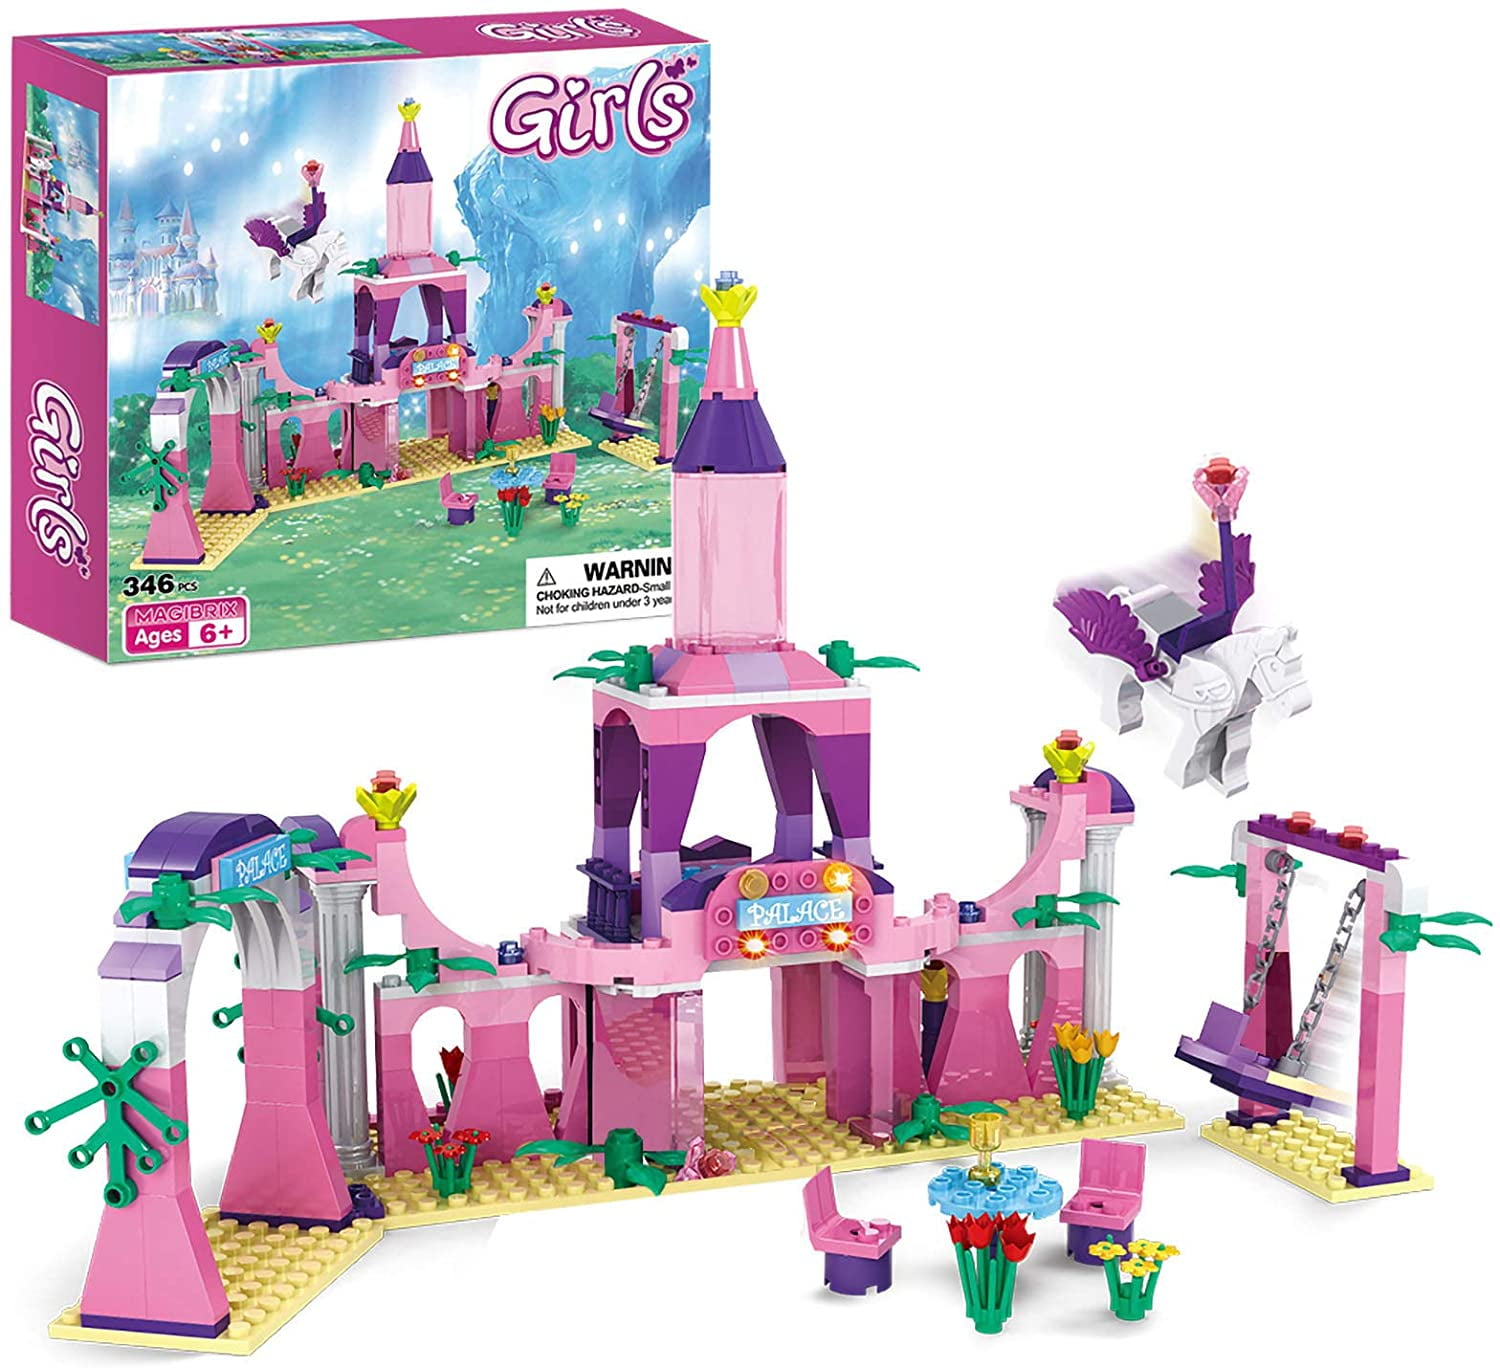 Minifigures Set Disney Toy Story Princess Set Building Block Compatible Toy 